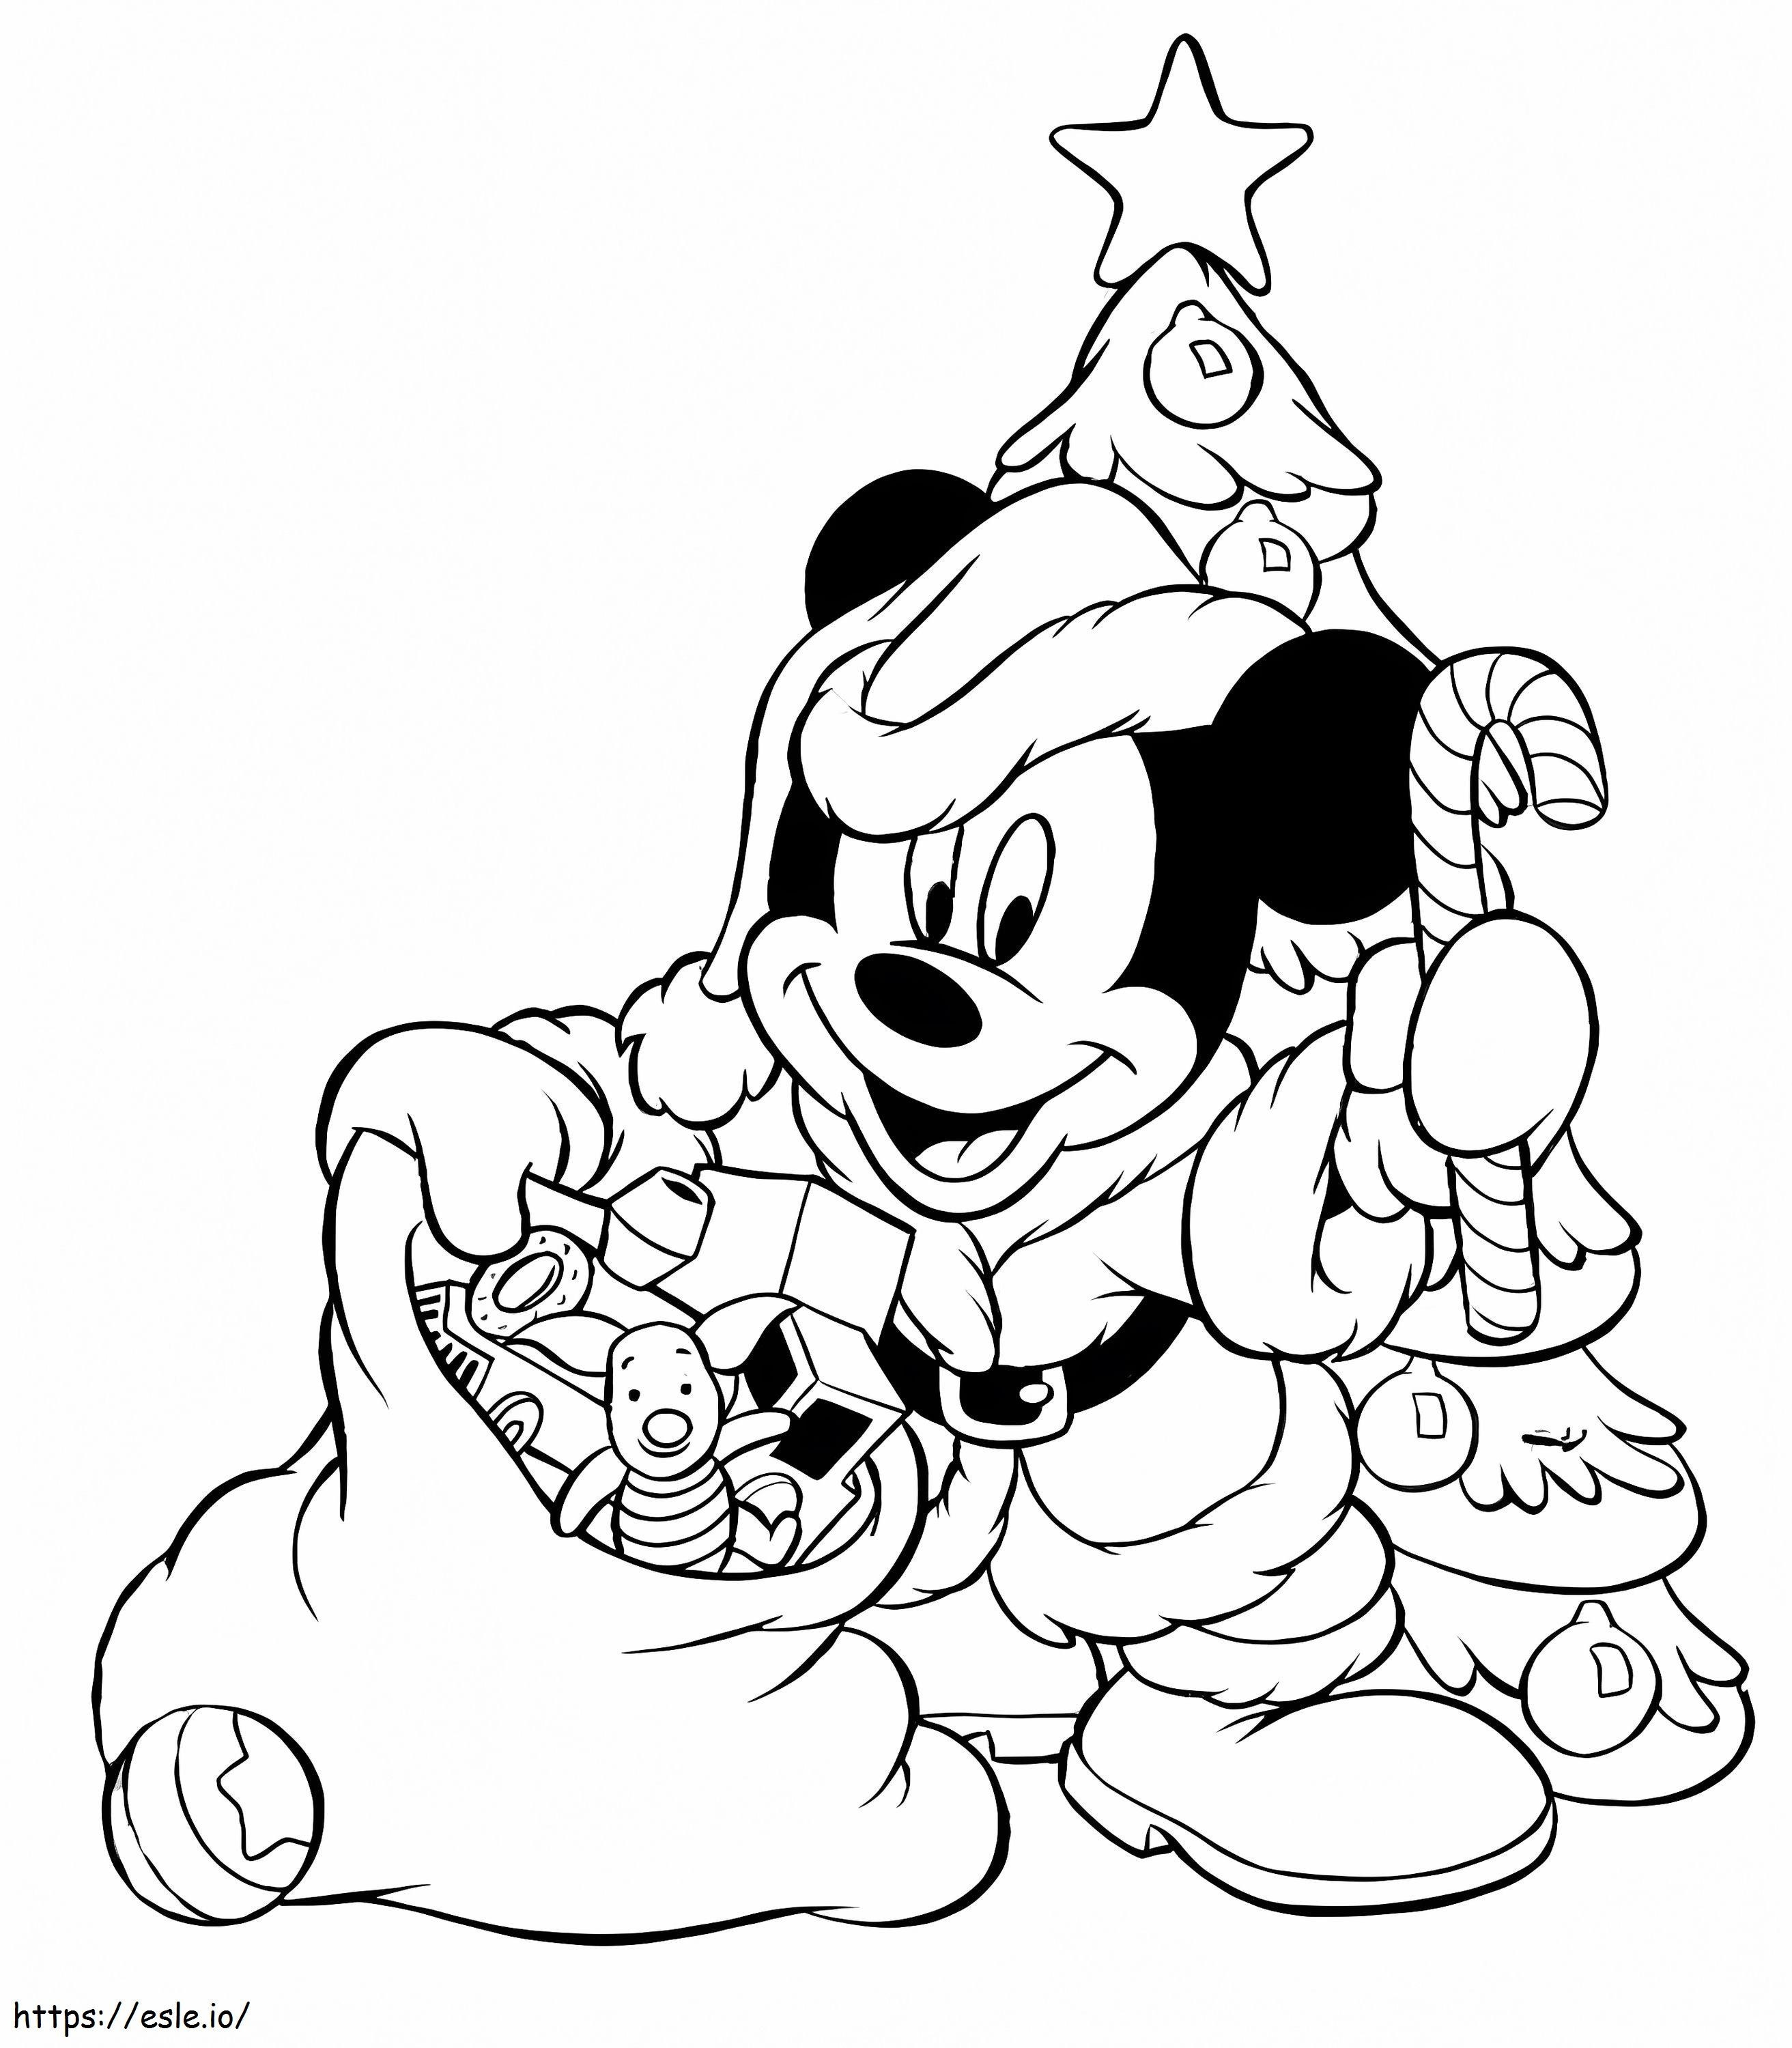 Papai Noel de Natal do Mickey Mouse para colorir